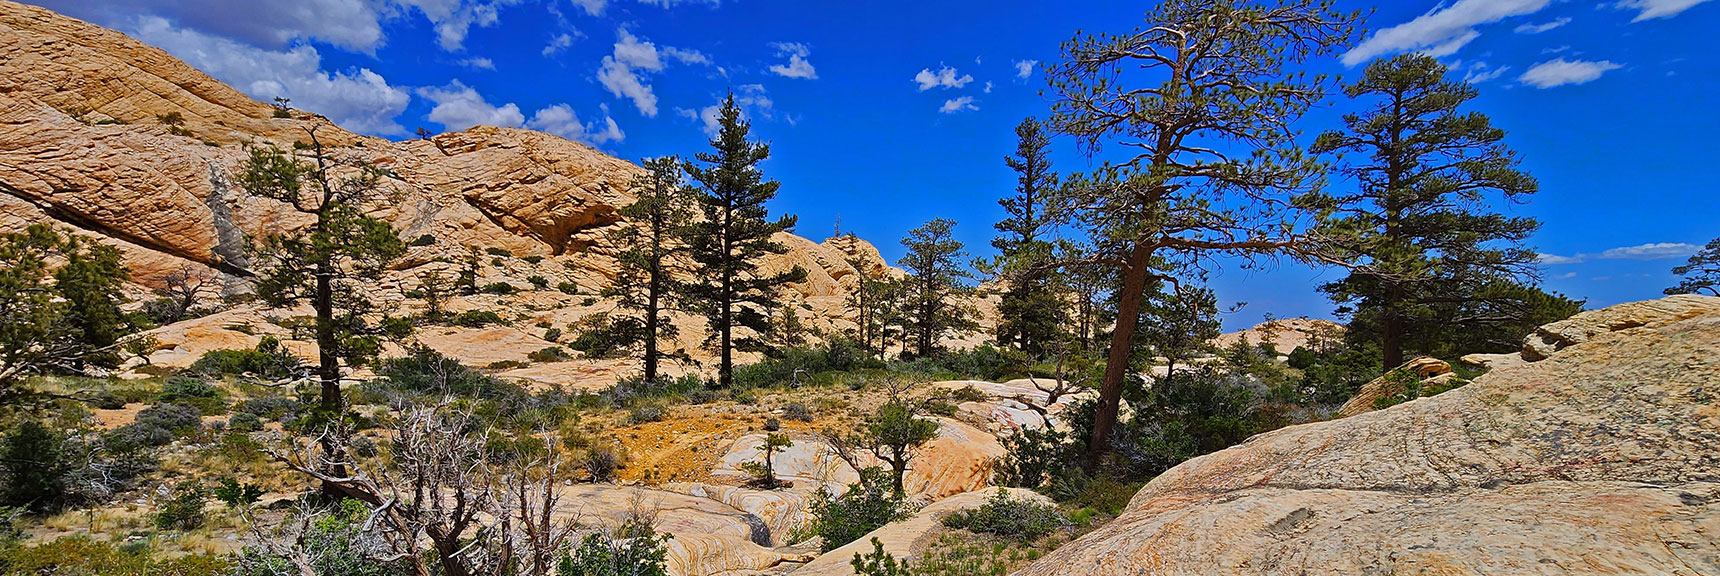 Final Descent into Little Zion | Little Zion | Rainbow Mountain Wilderness, Nevada